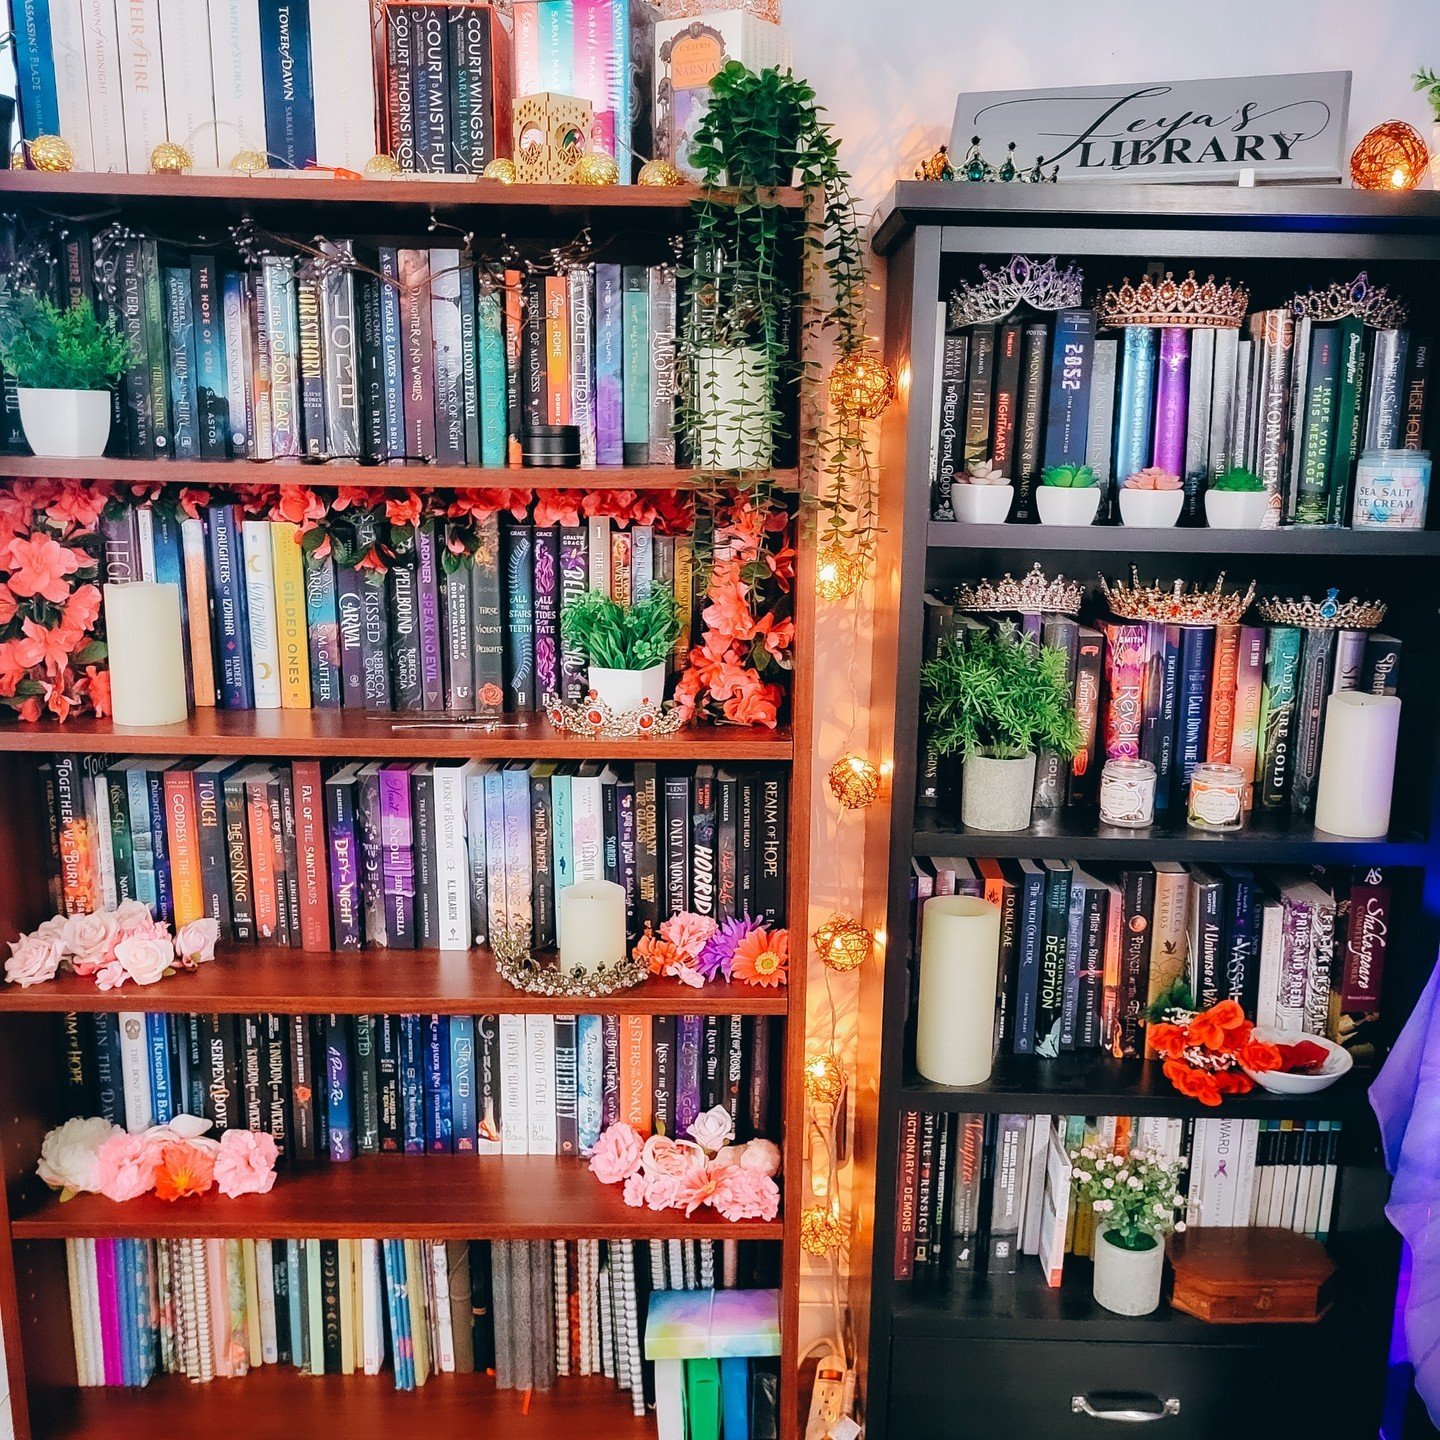 ✨📚 𝑺𝒖𝒏𝒅𝒂𝒚 𝑺𝒉𝒆𝒍𝒇𝒊𝒆 📚✨

How do you decorate your book shelves? Do you display all your bookish merch? Or do you like your shelves sleek and simple?

𝘓𝘦𝘵 𝘮𝘦 𝘬𝘯𝘰𝘸 𝘪𝘯 𝘵𝘩𝘦 𝘤𝘰𝘮𝘮𝘦𝘯𝘵𝘴 𝘣𝘦𝘭𝘰𝘸.

-----

🏷️: #sundayshelfi